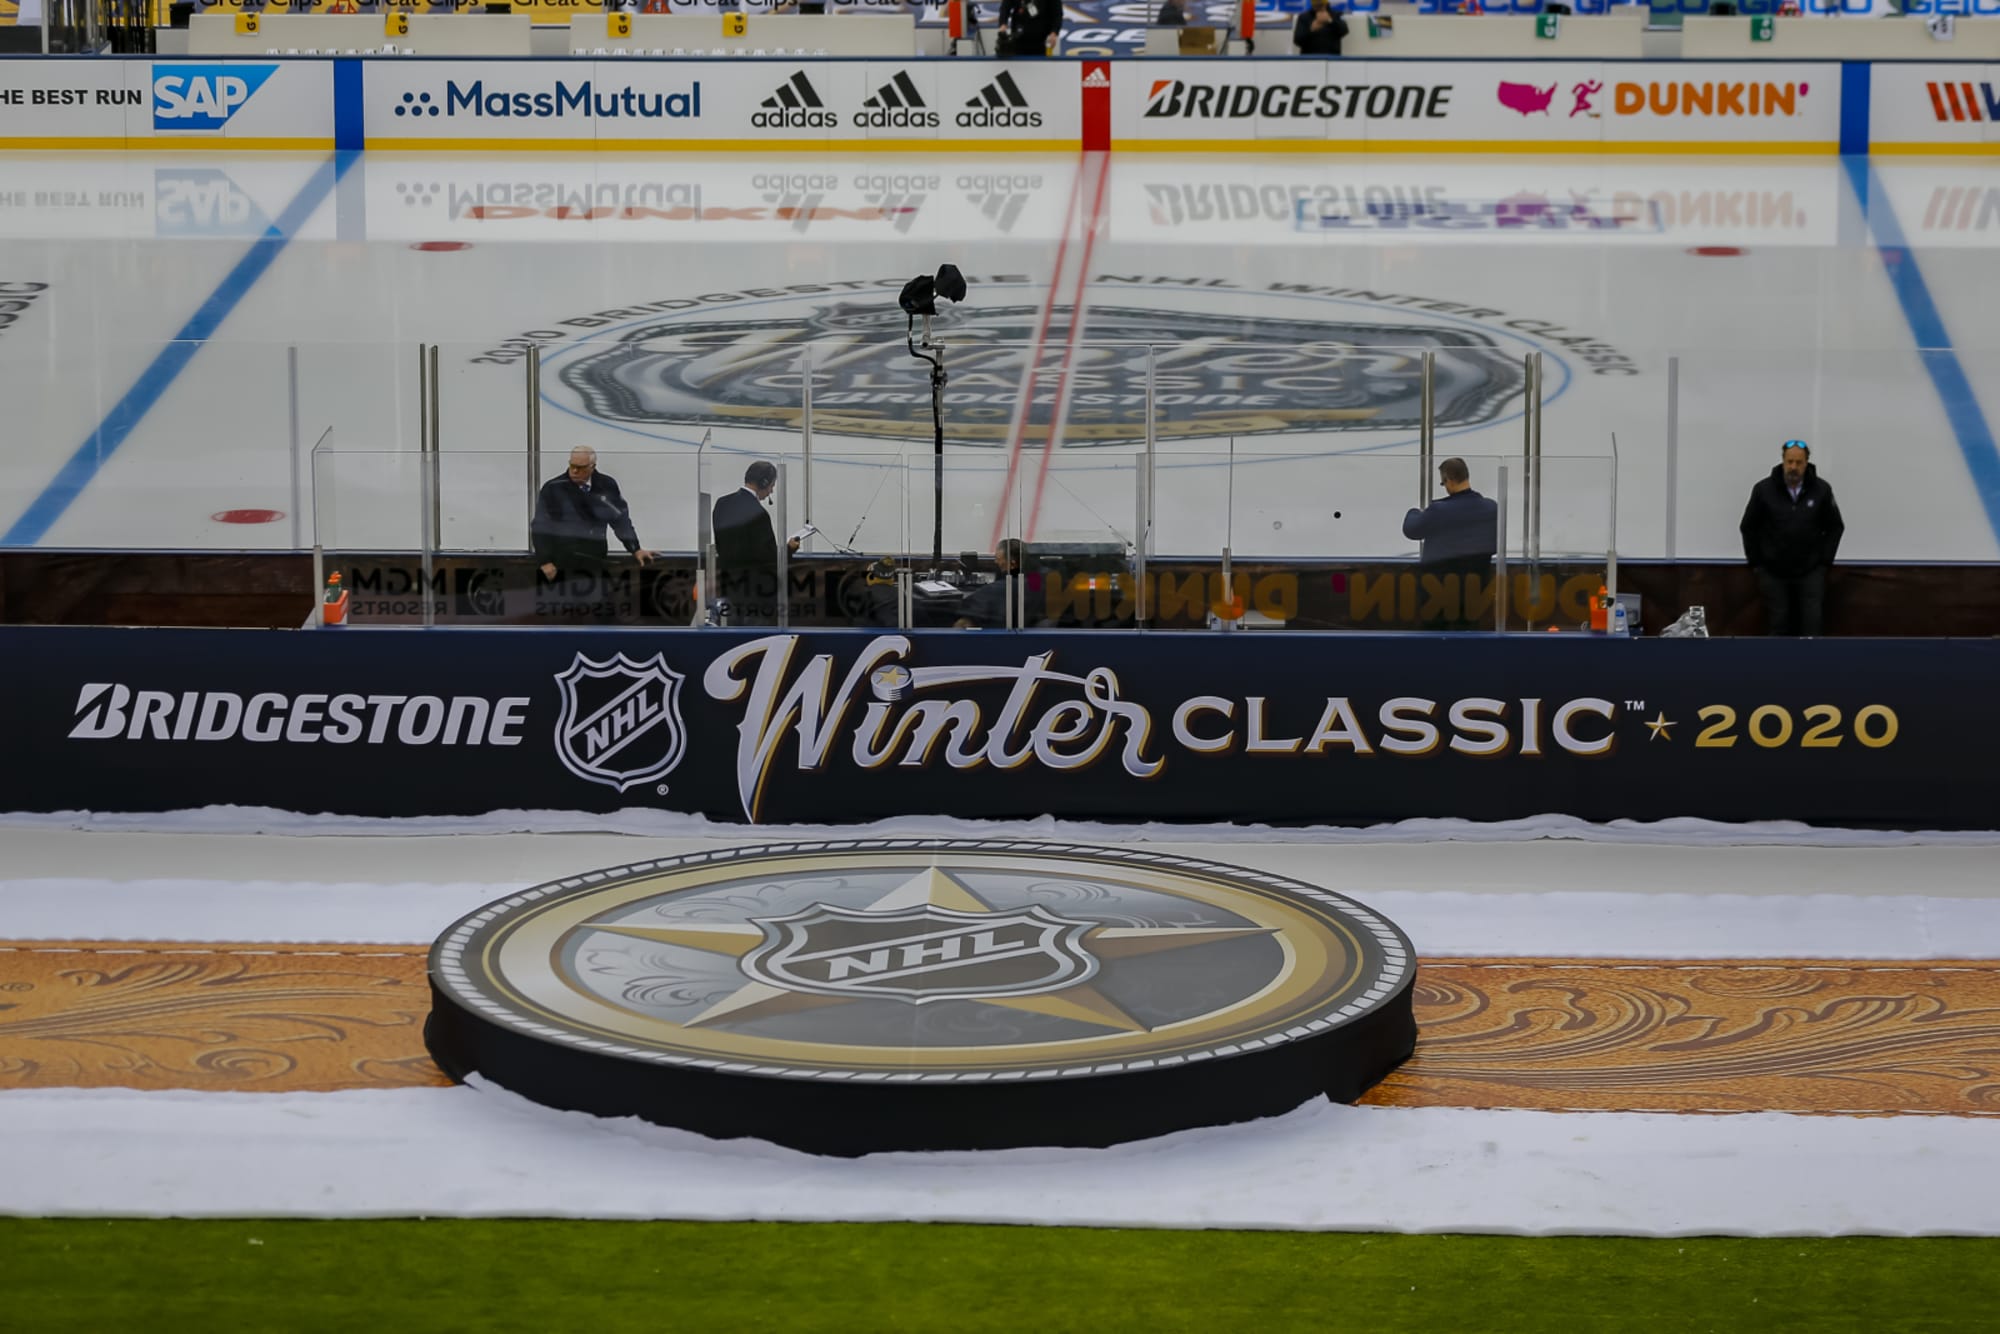 PHOTO GALLERY: 2019 Bridgestone Winter Classic - Inside Hockey